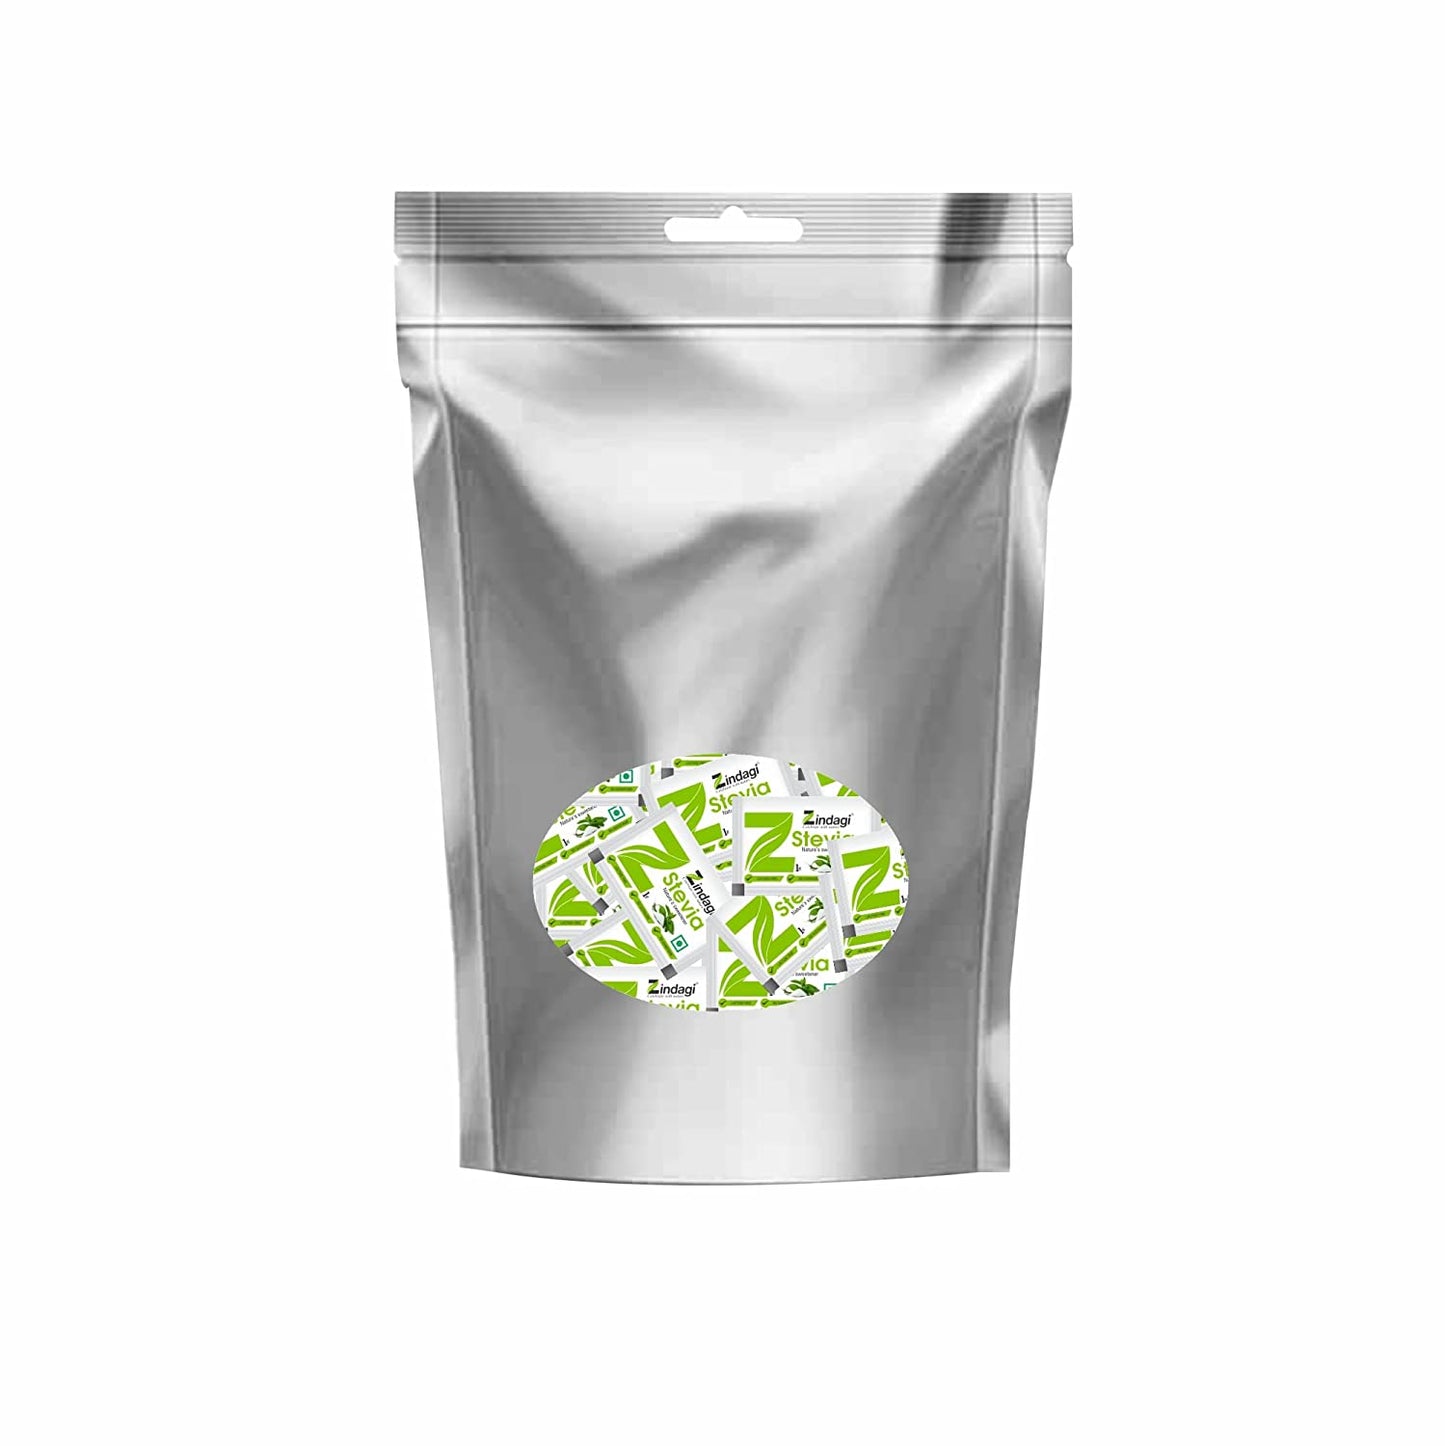 Zindagi Stevia White Powder Sachets  - Fat burner Sugar free Sweetener -  Stevia Leaf Extract  100gm